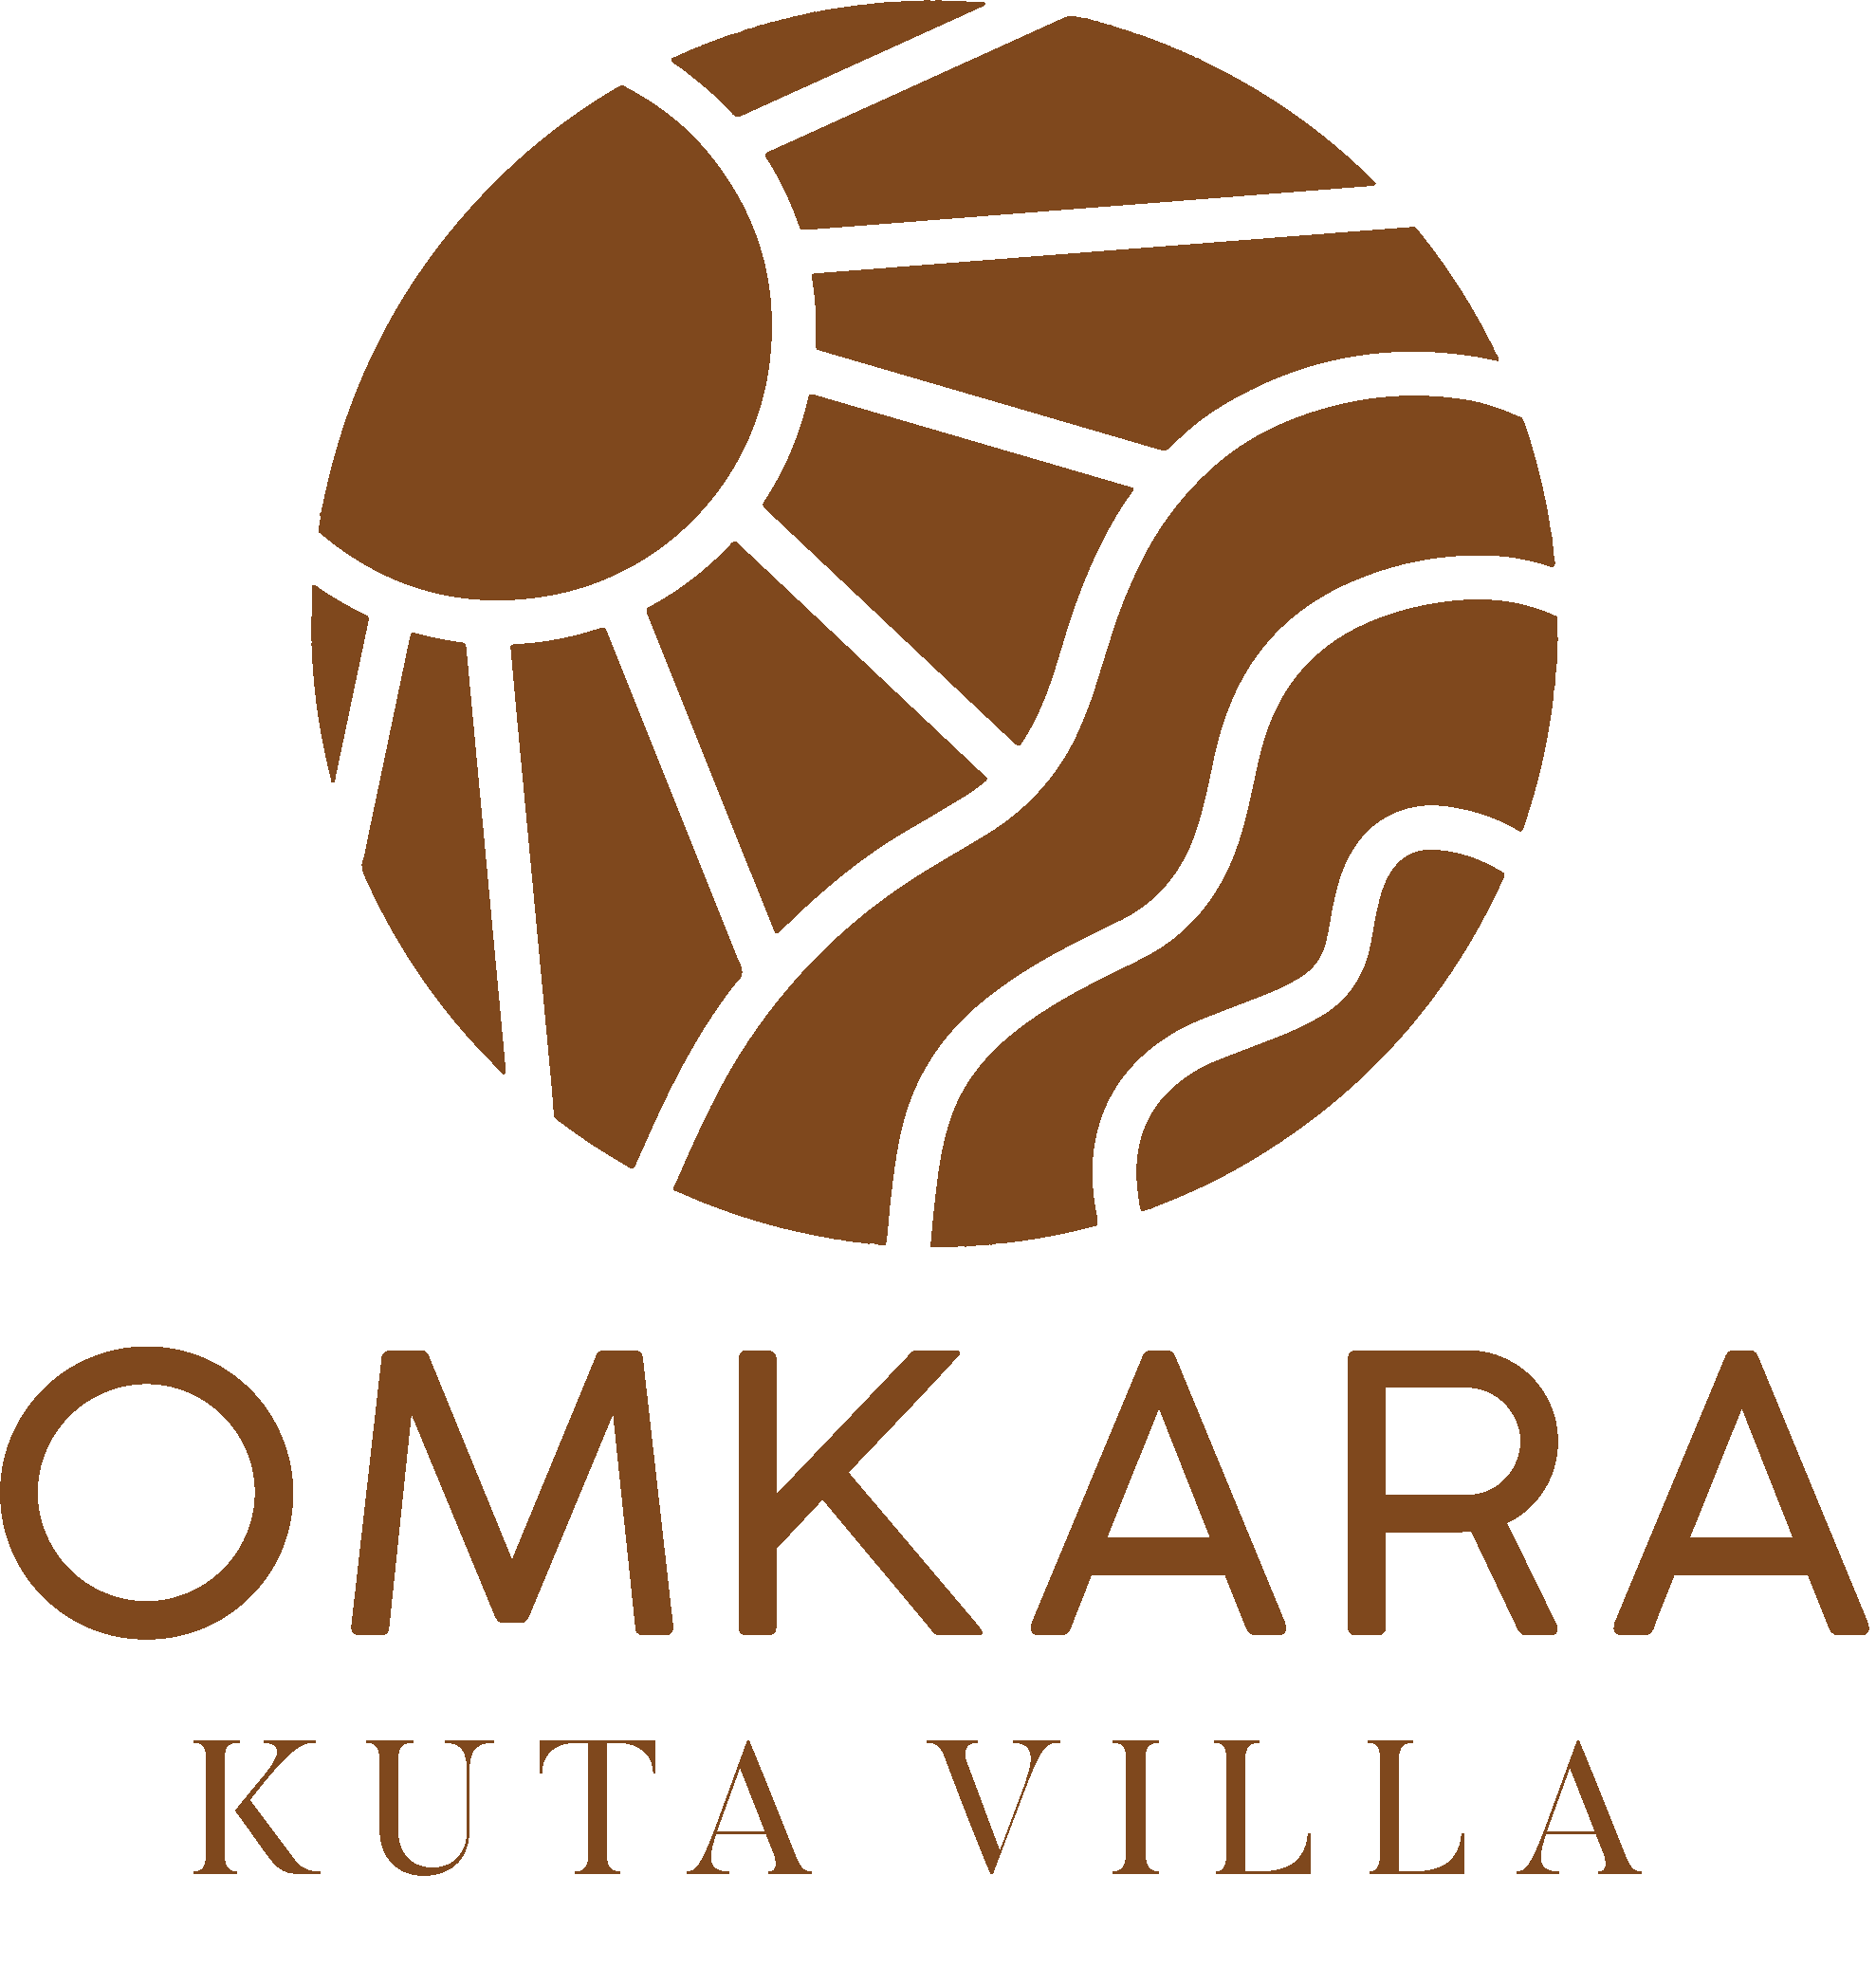 Omkara Experience - OMKARA